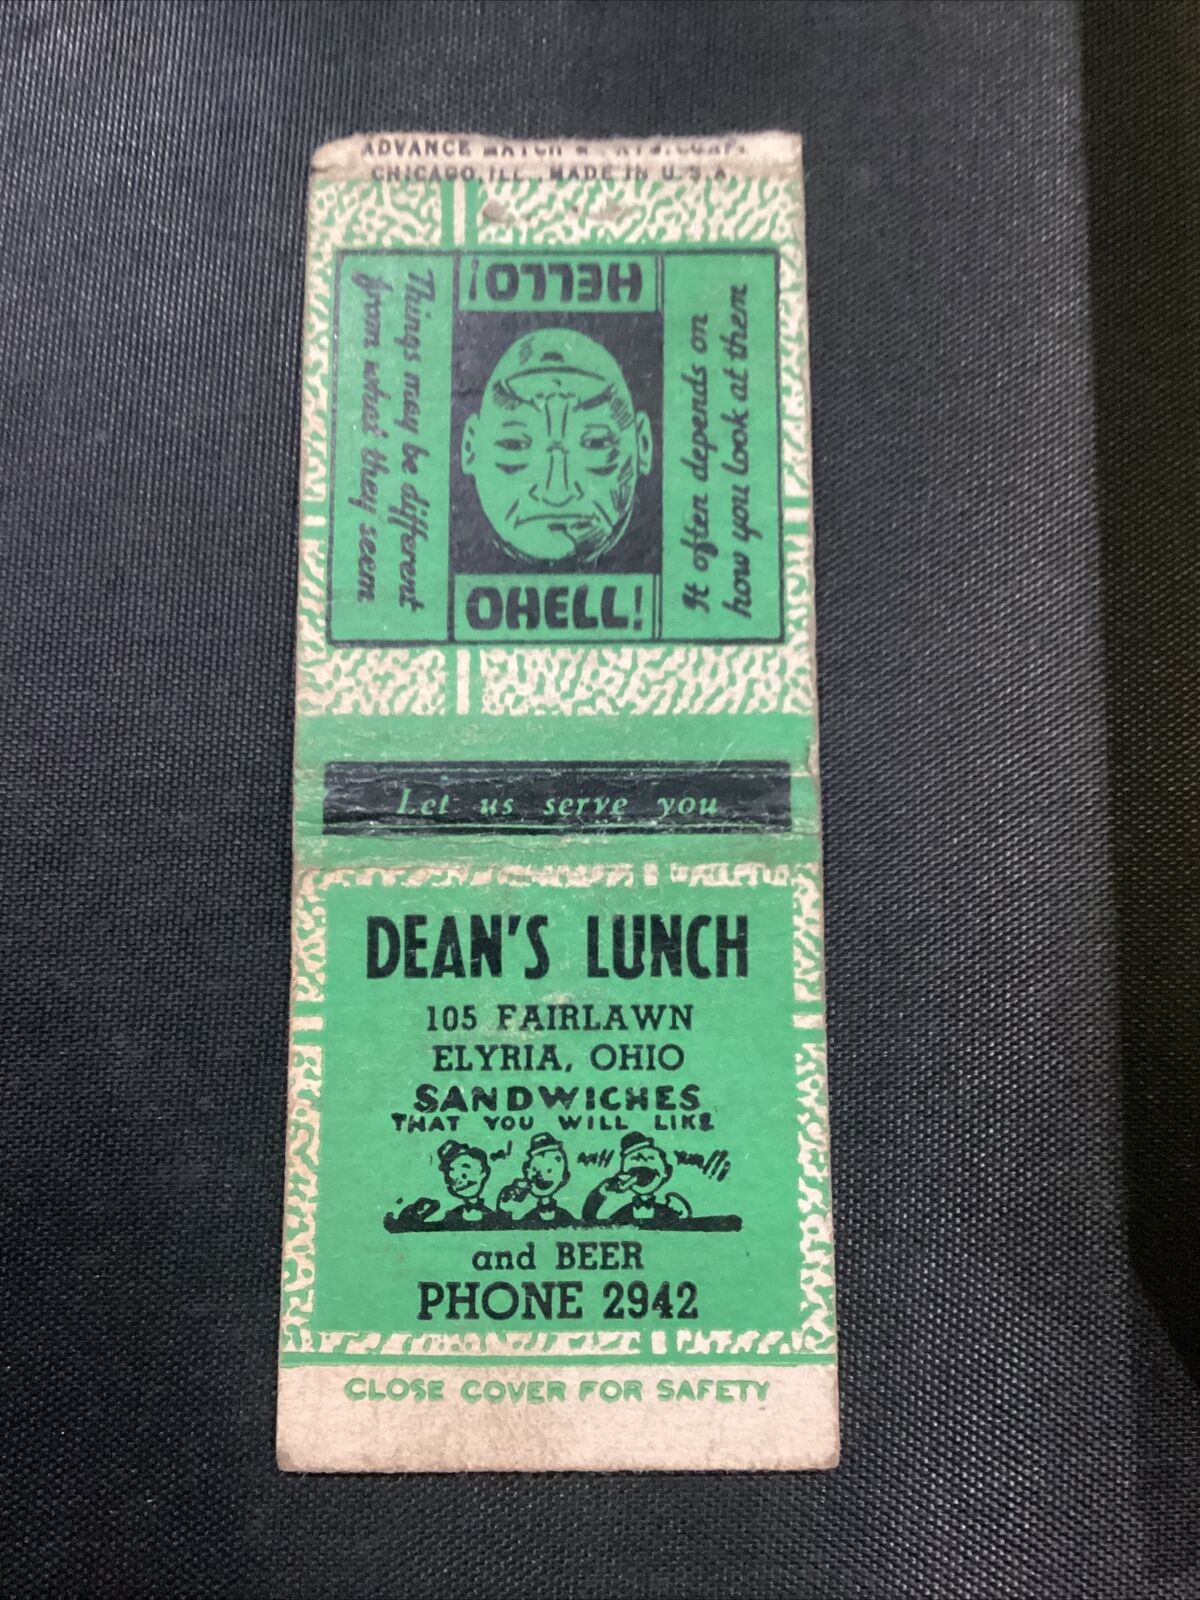 Dean’s Lunch Fairlawn Elyria Ohio Sandwiches Restaurant Ad trimmed Matchbook Cvr